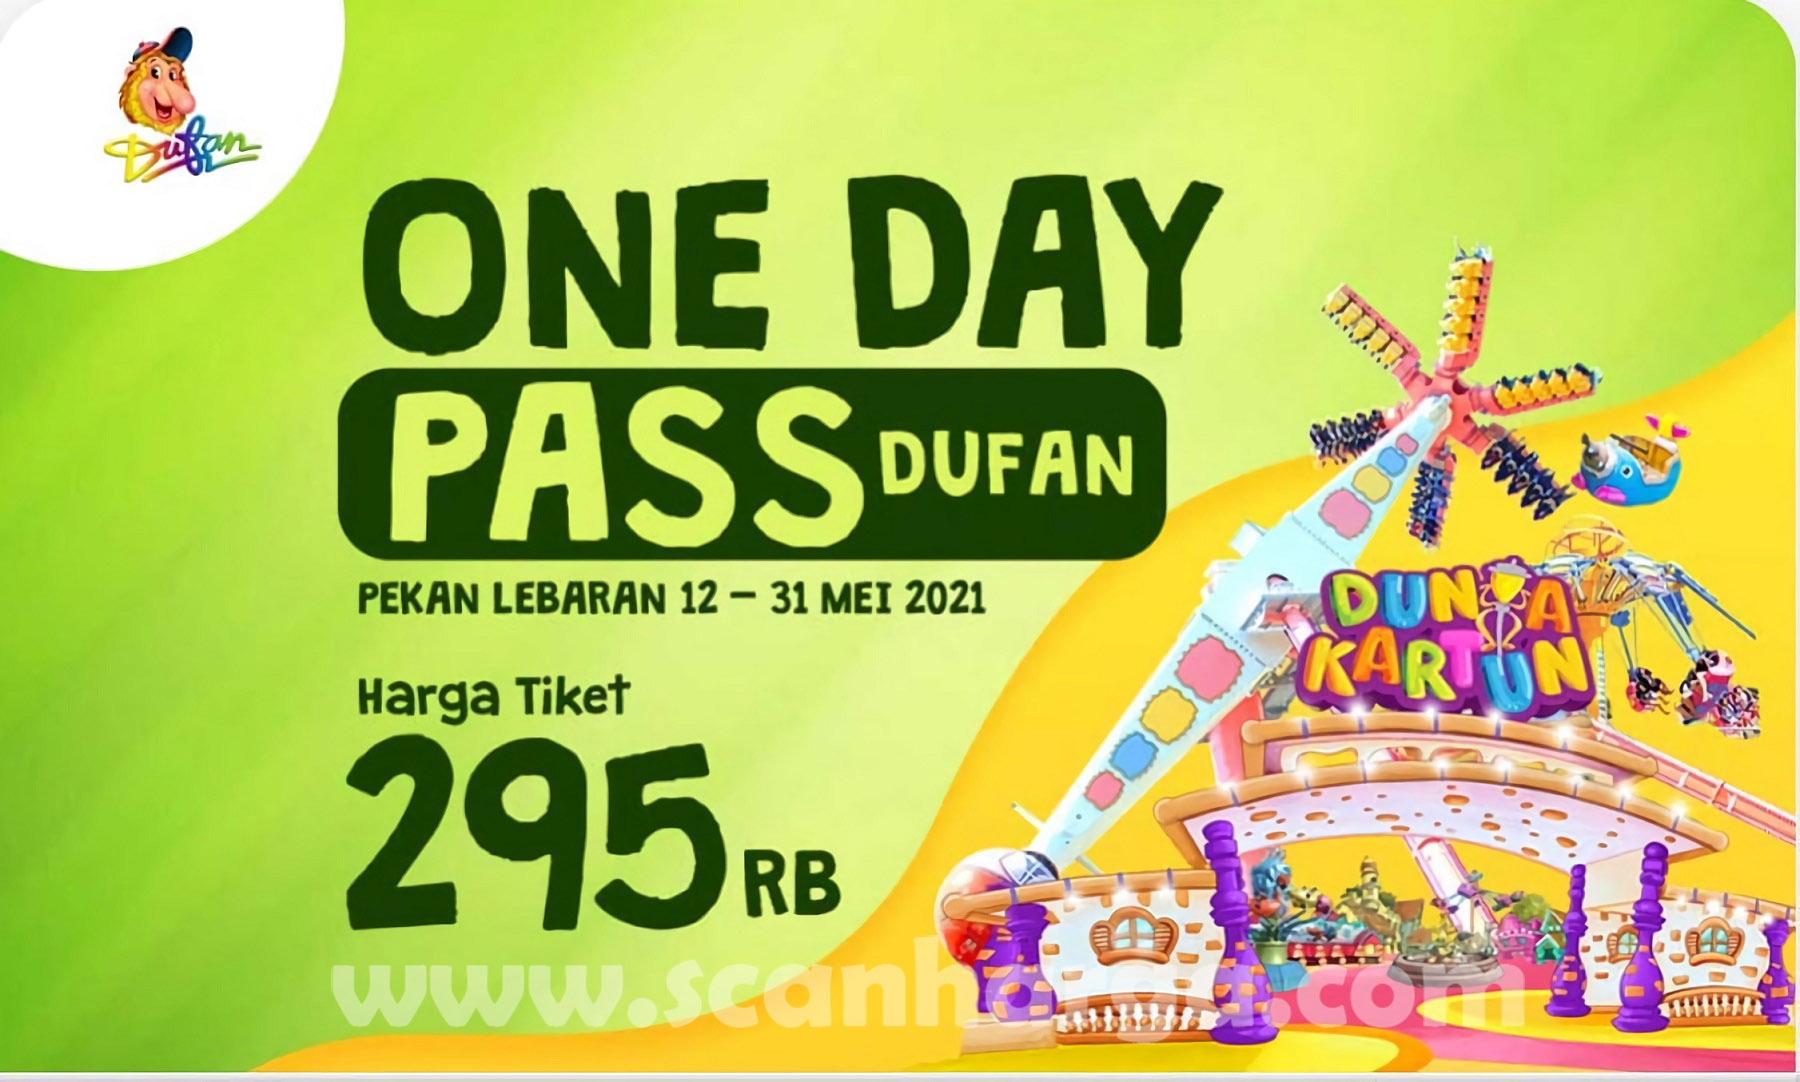 DUFAN Promo Pekan LEBARAN - One Day Pass harga Tiket Rp. 295.000 per orang